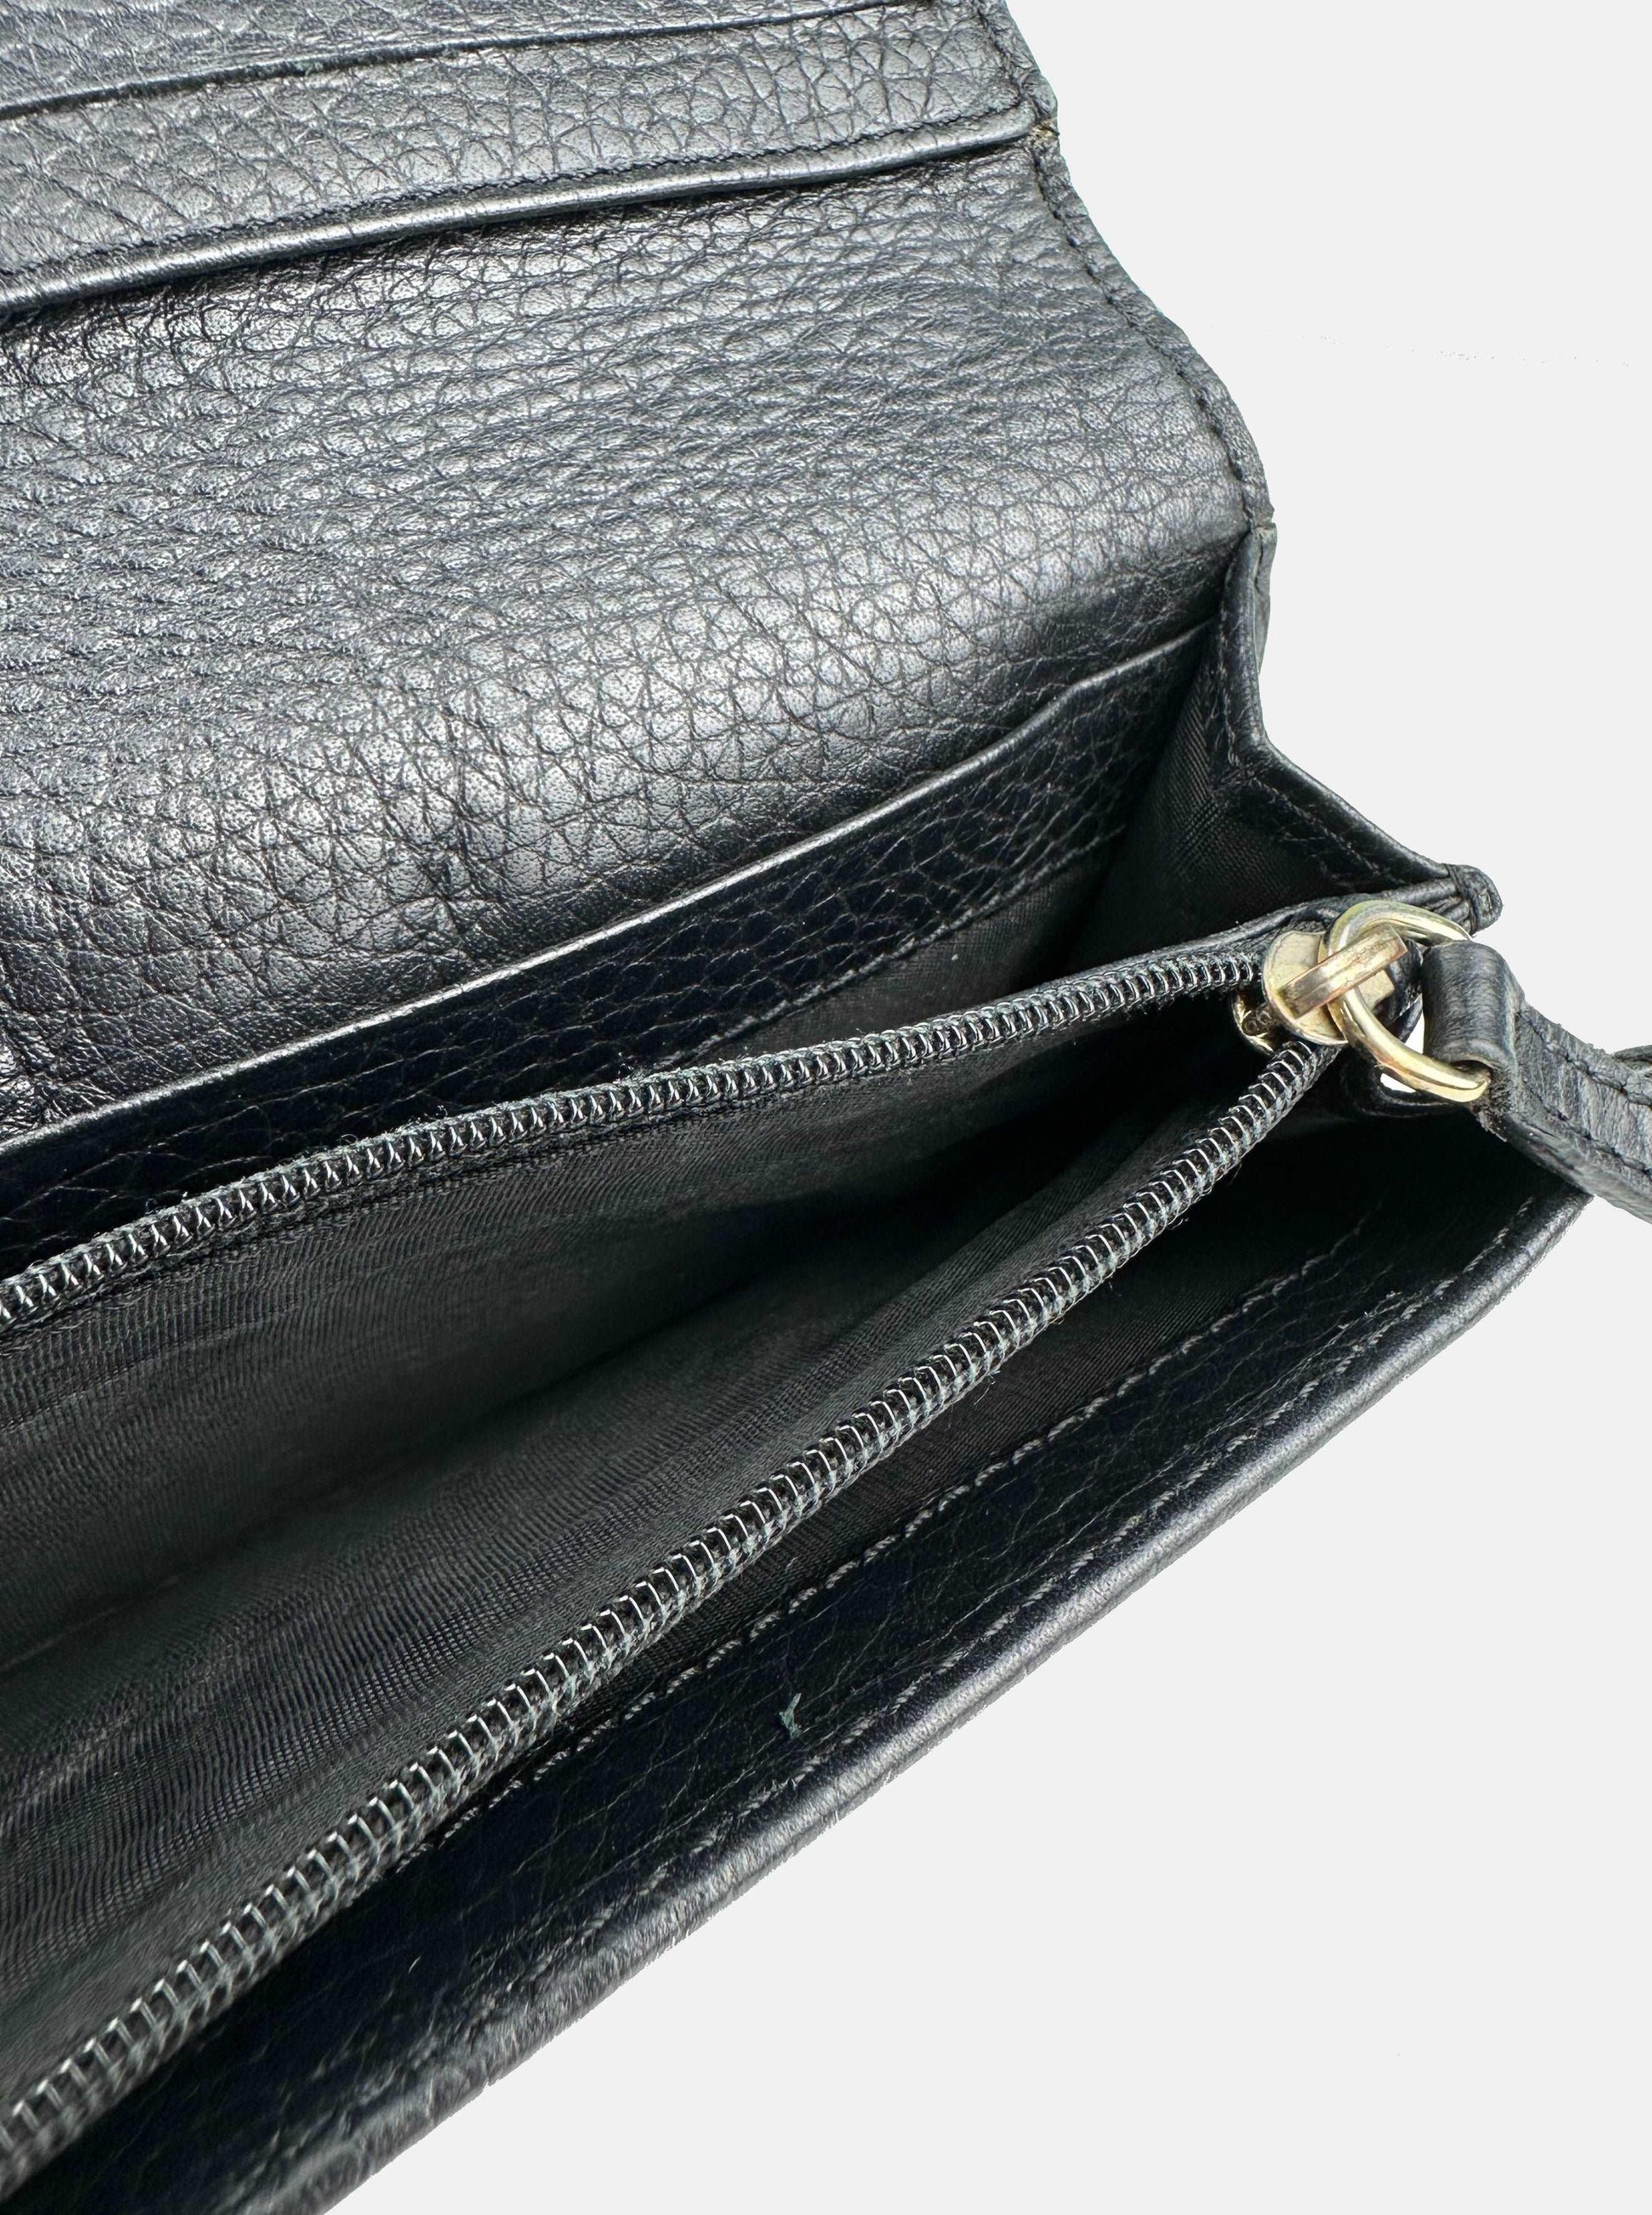 Black Leather Multi Compartment Purse Wallet